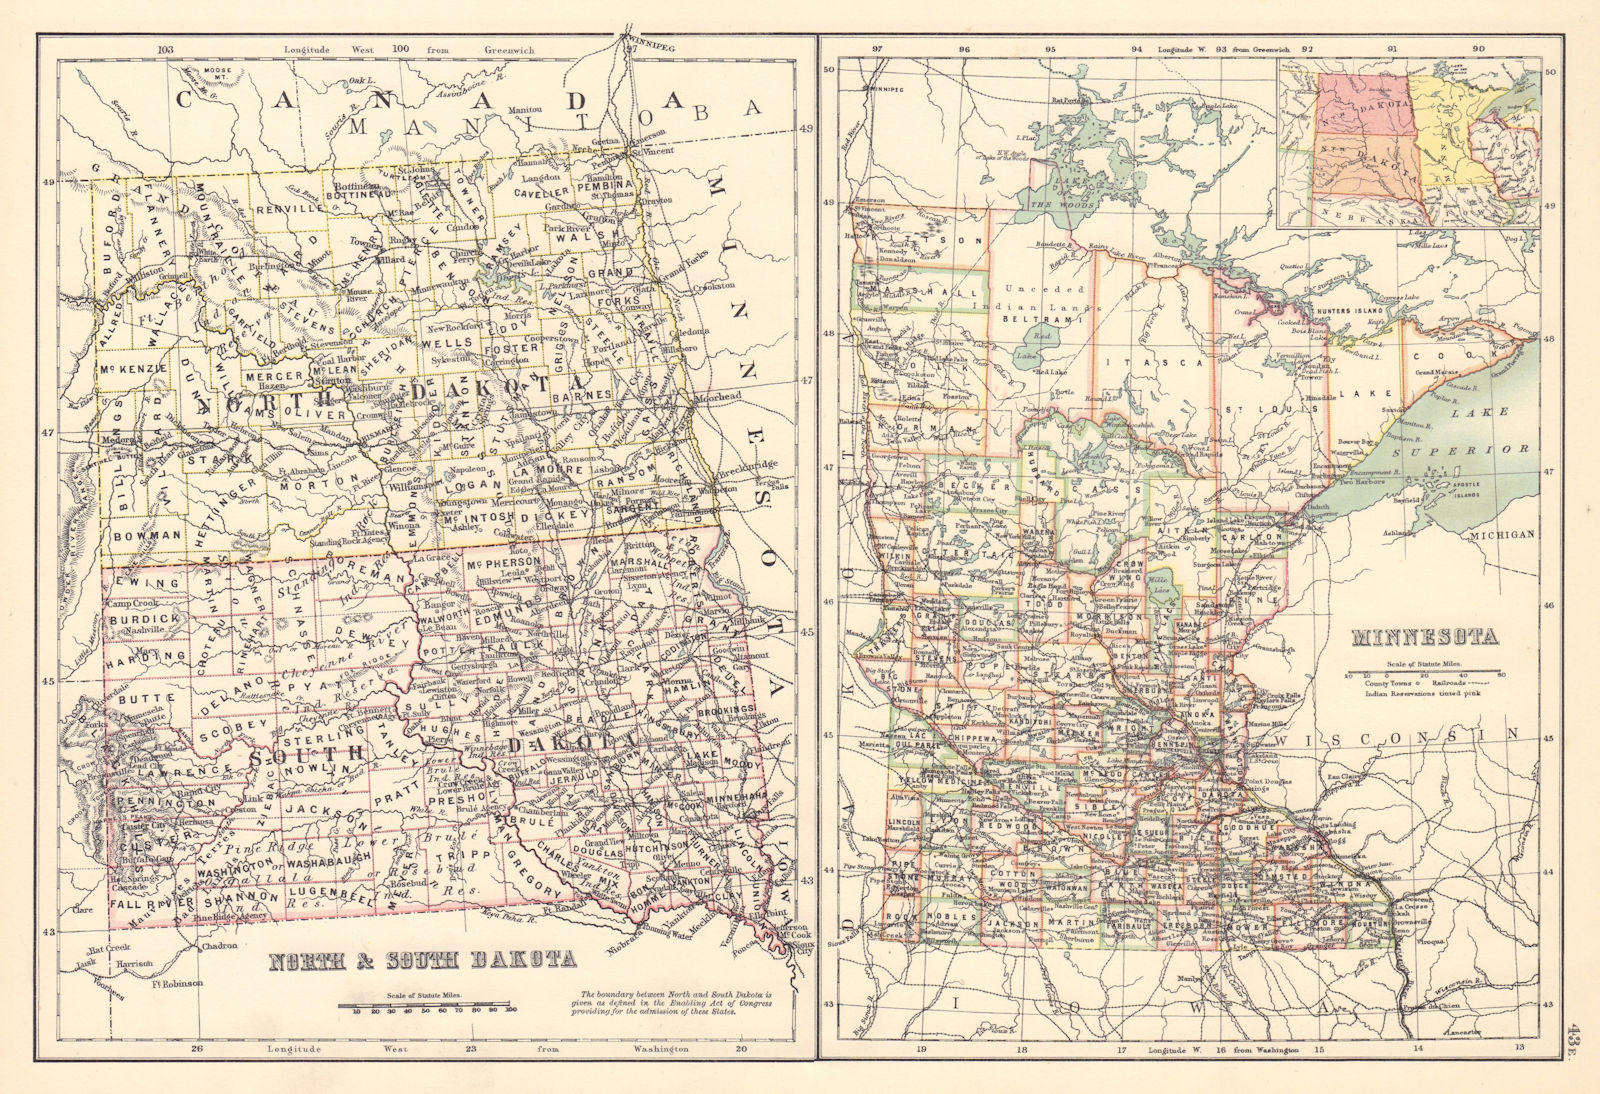 North & South Dakota & Minnesota state maps showing counties. BARTHOLOMEW 1898